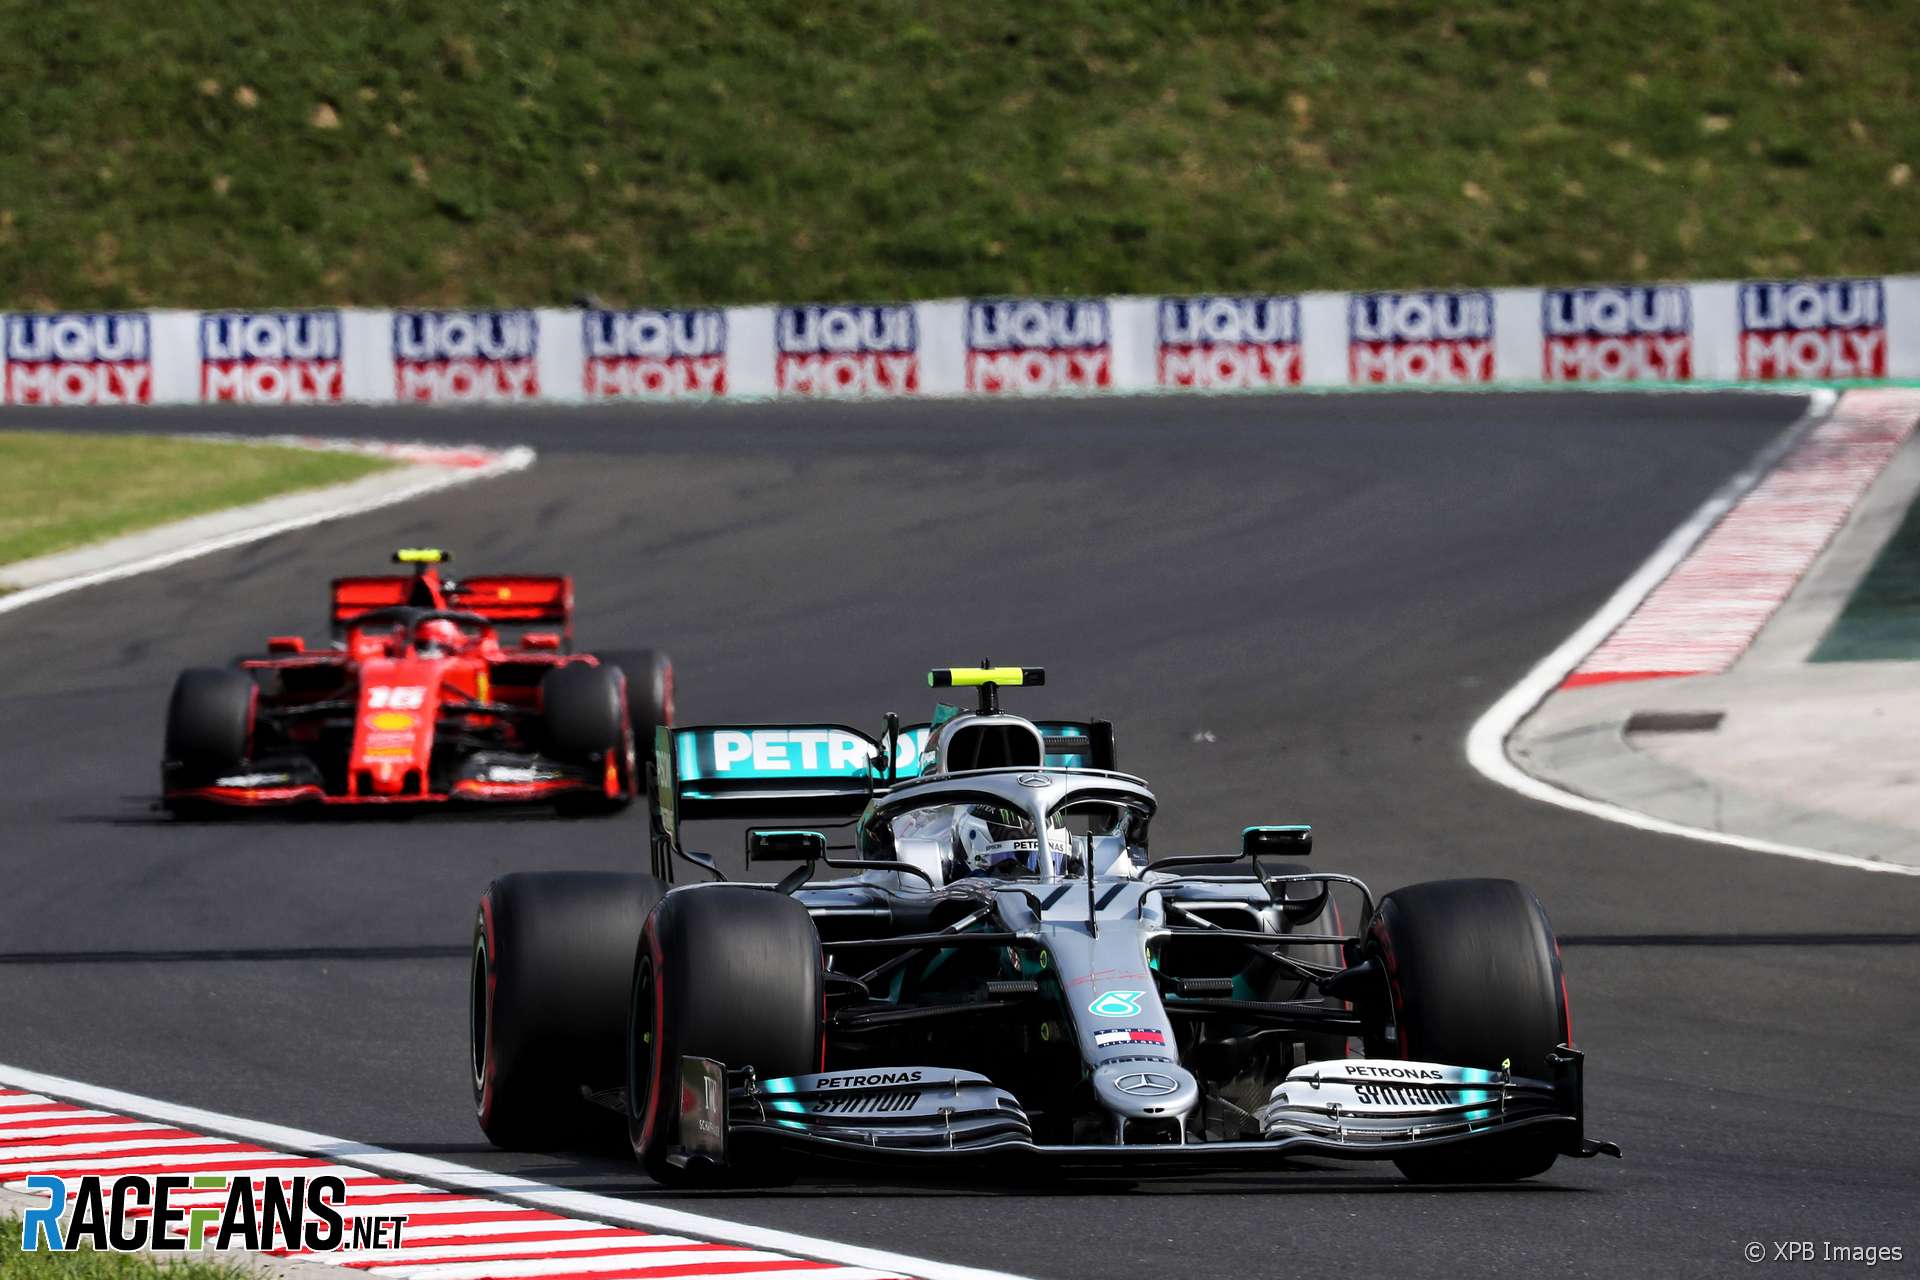 Valtteri Bottas, Mercedes, Hungaroring, 2019